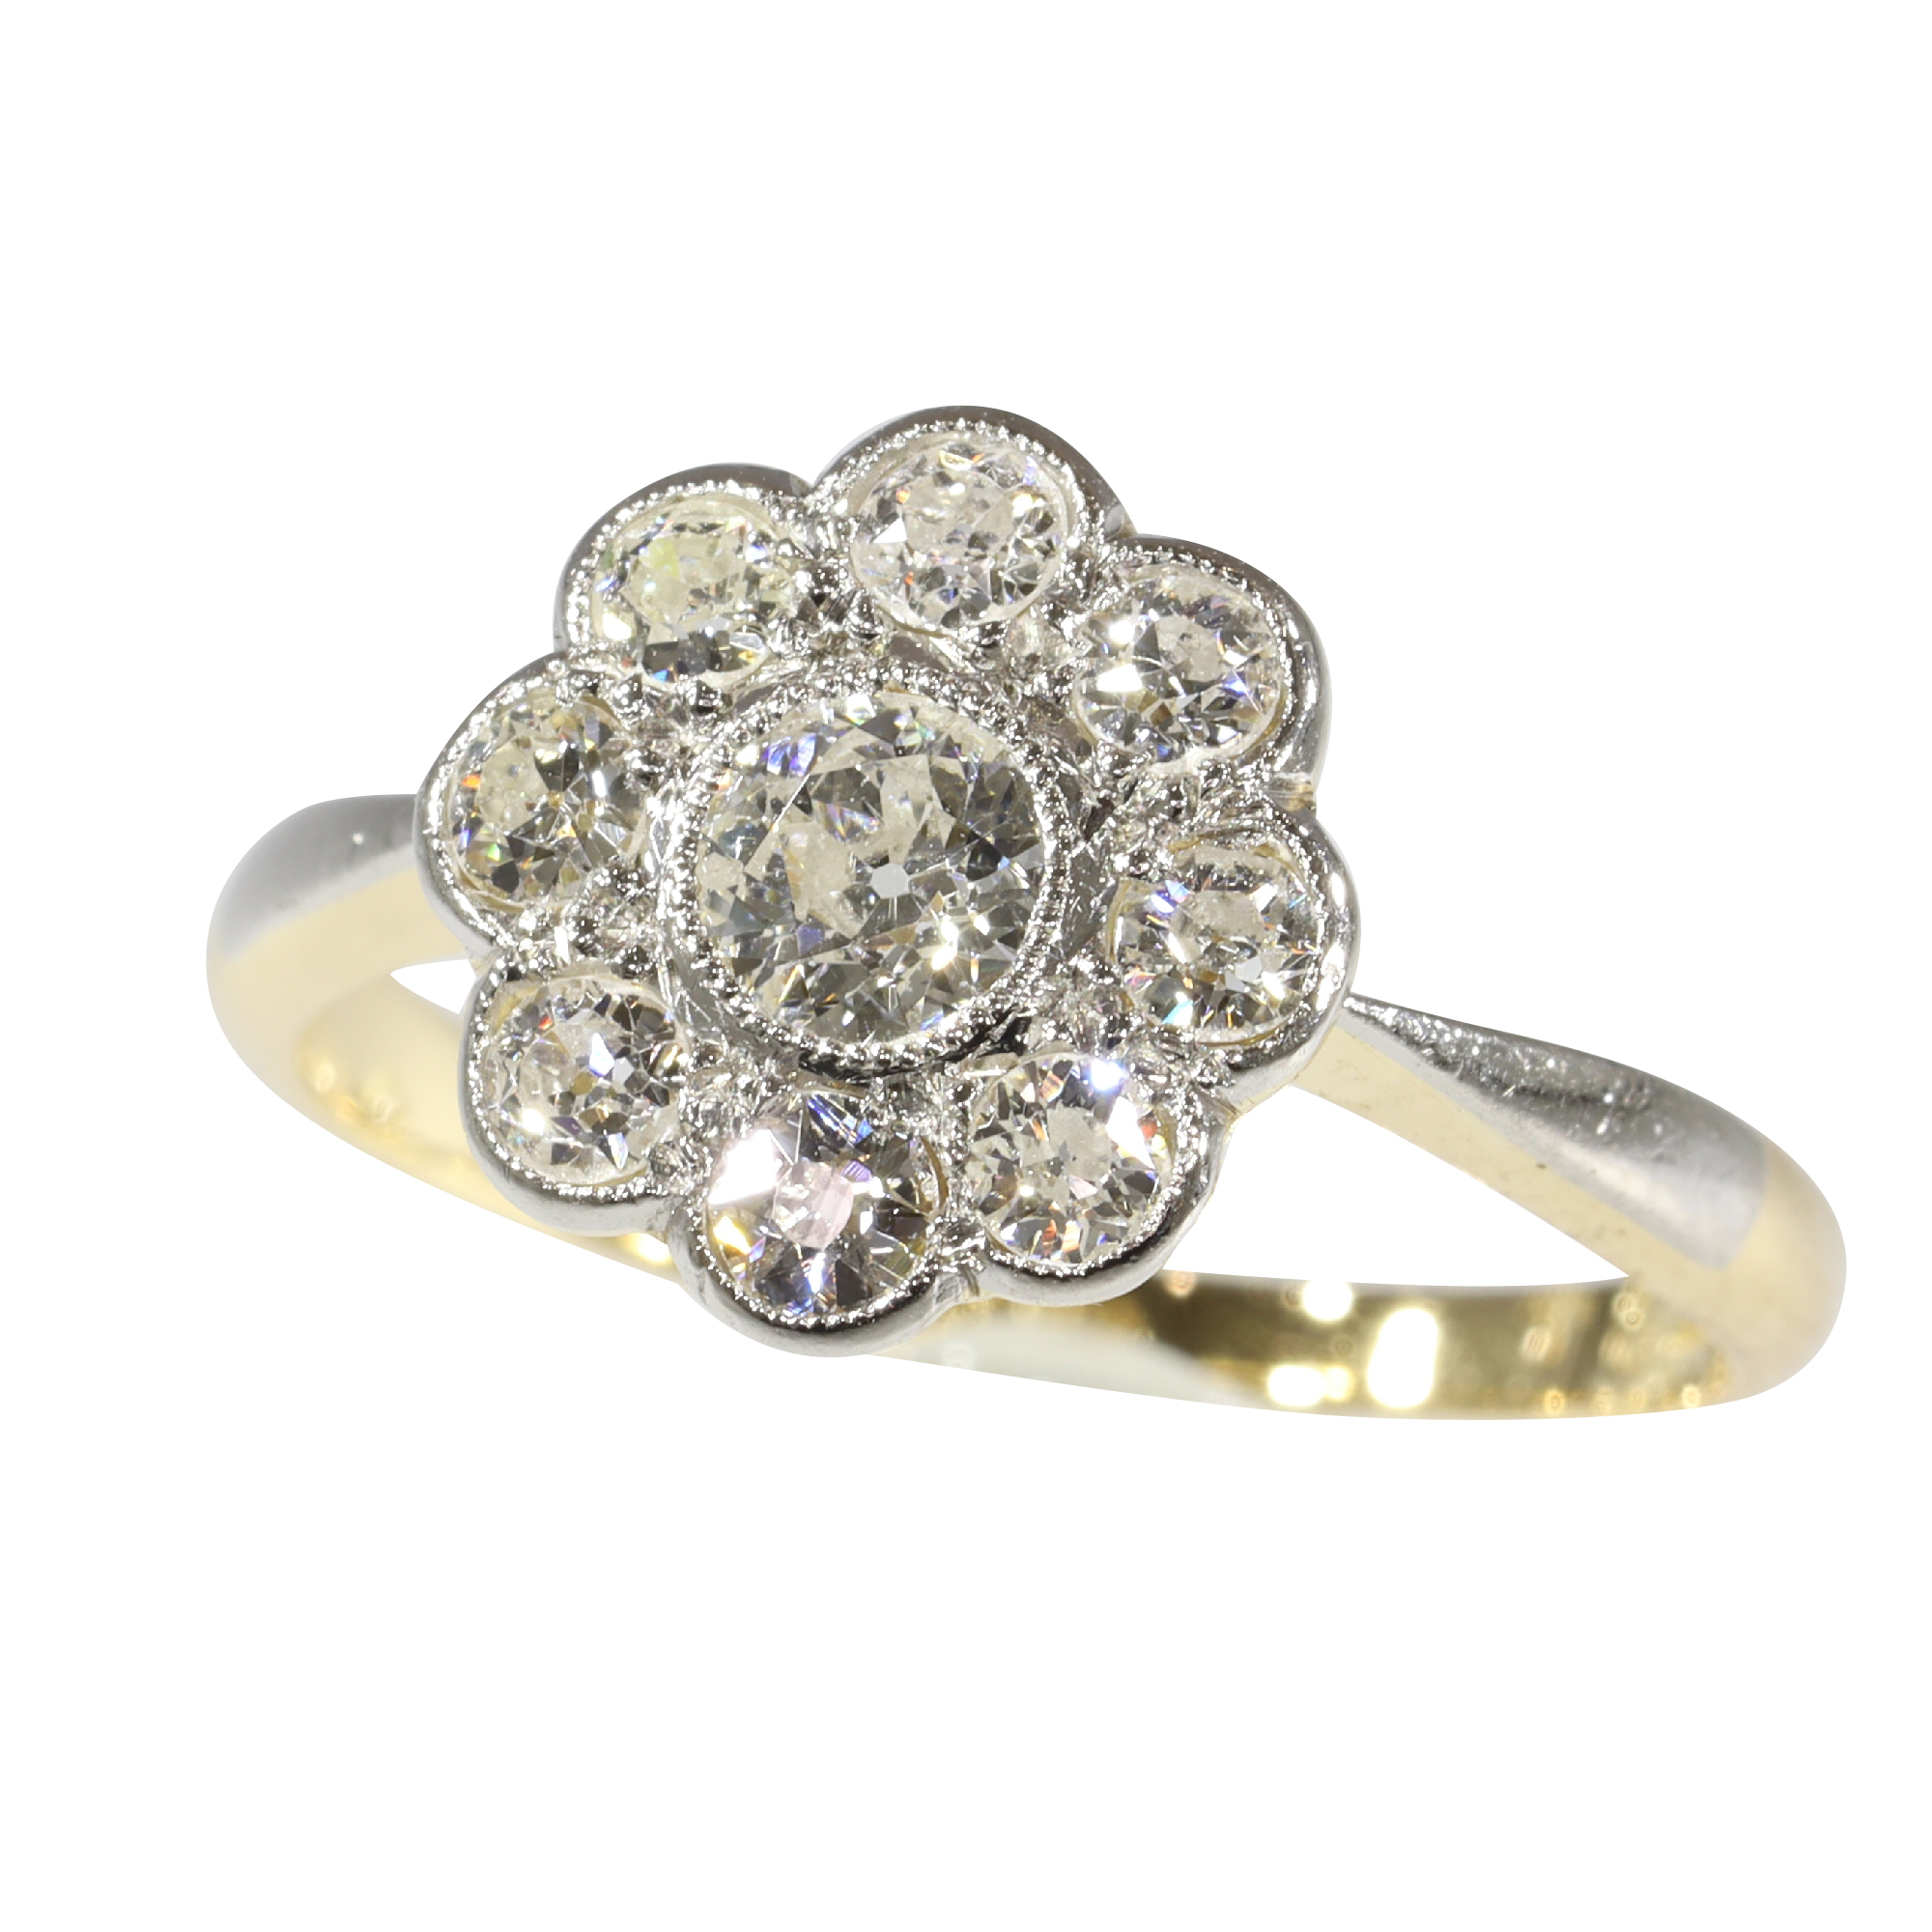 Vintage 1920's Art Deco diamond cluster ring